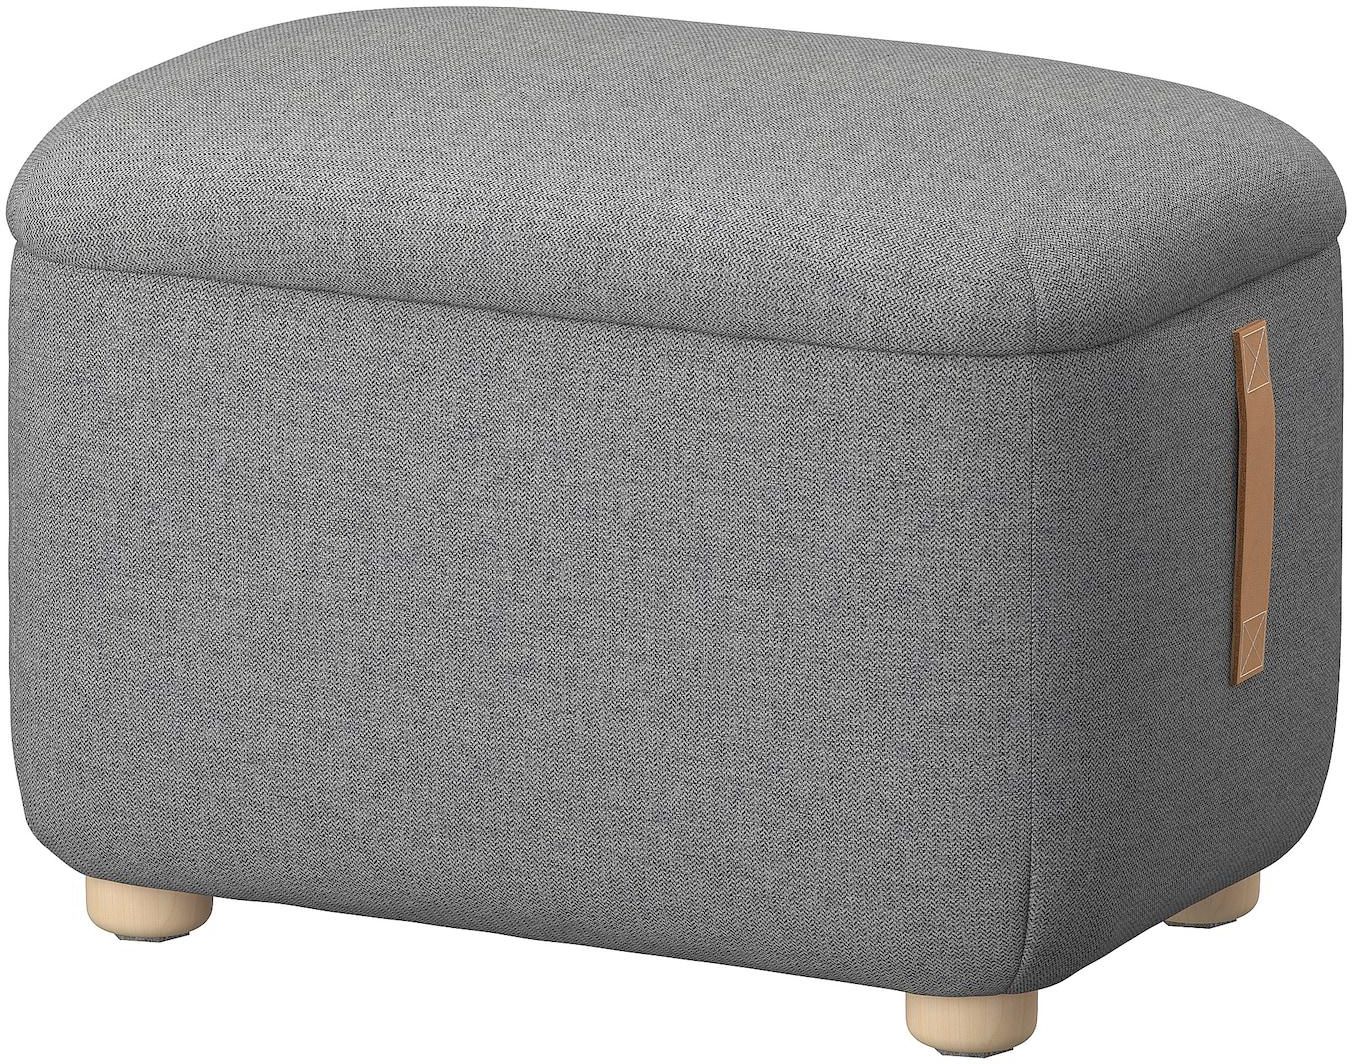 OSKARSHAMN Footstool with storage - Tibbleby beige/grey